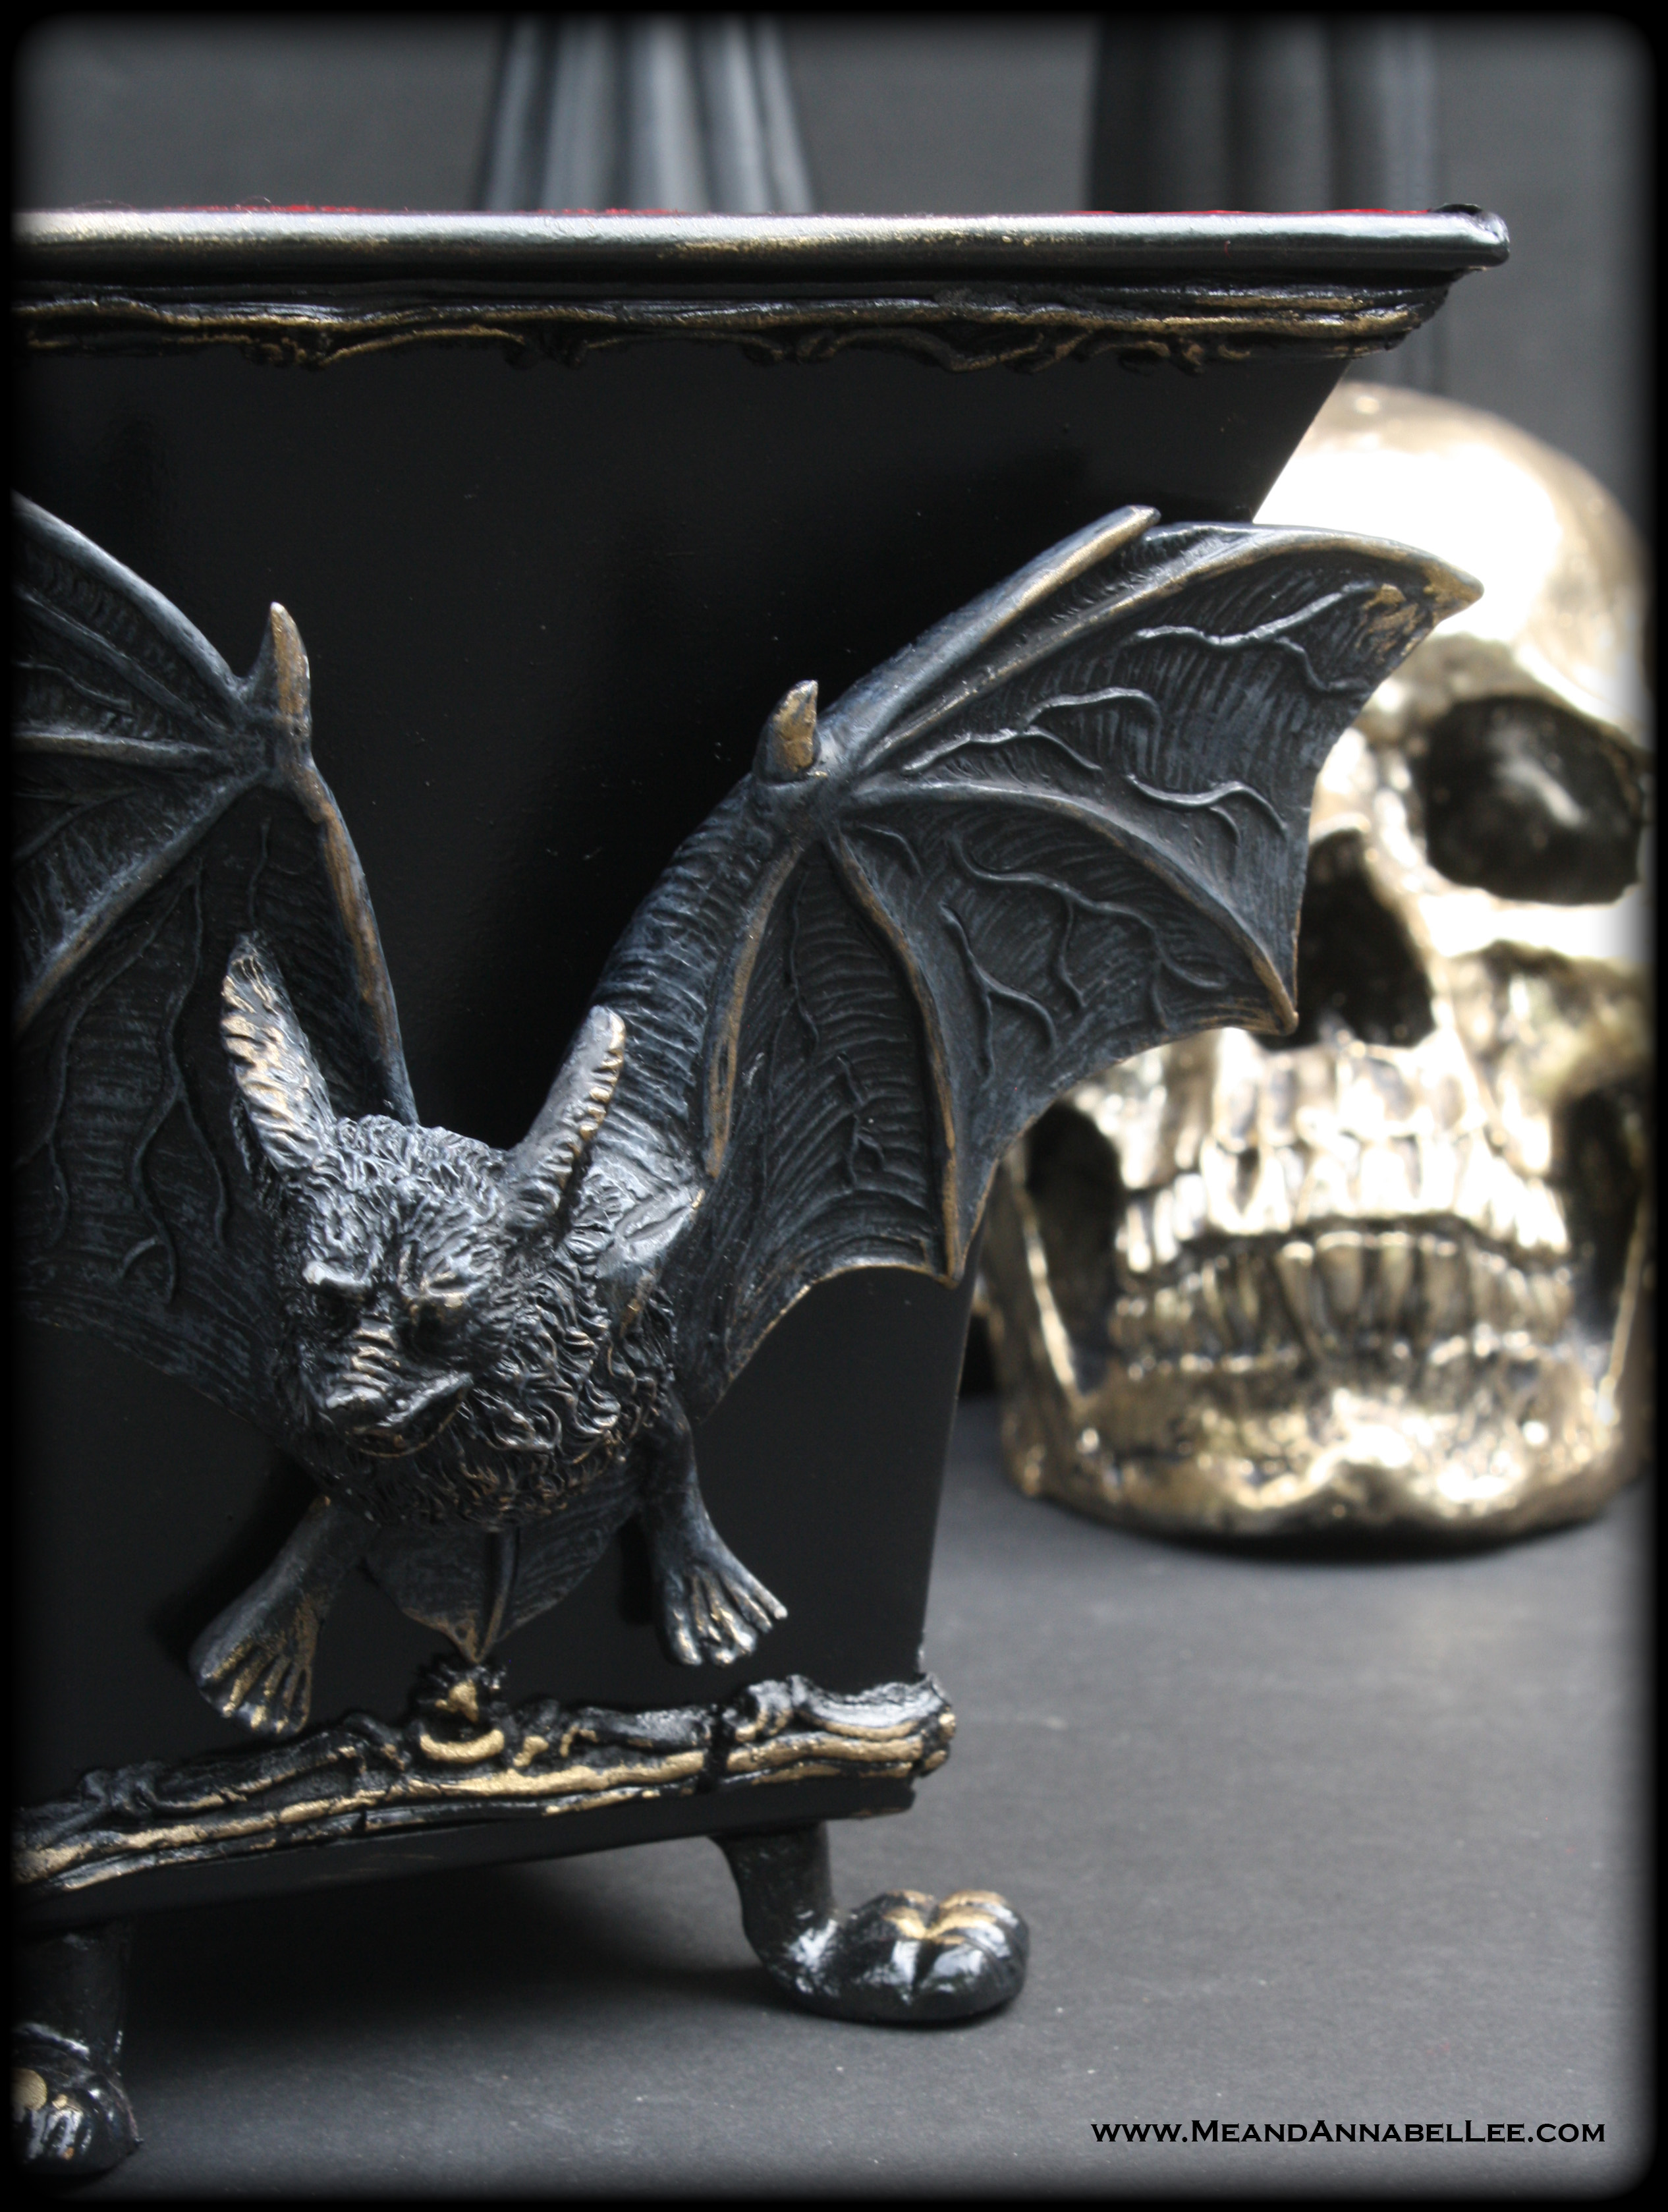 DIY Vampire Bat Trinket Box - How To Line a Box with Velvet - Gothic Home Decor - www.MeandAnnabelLee.com